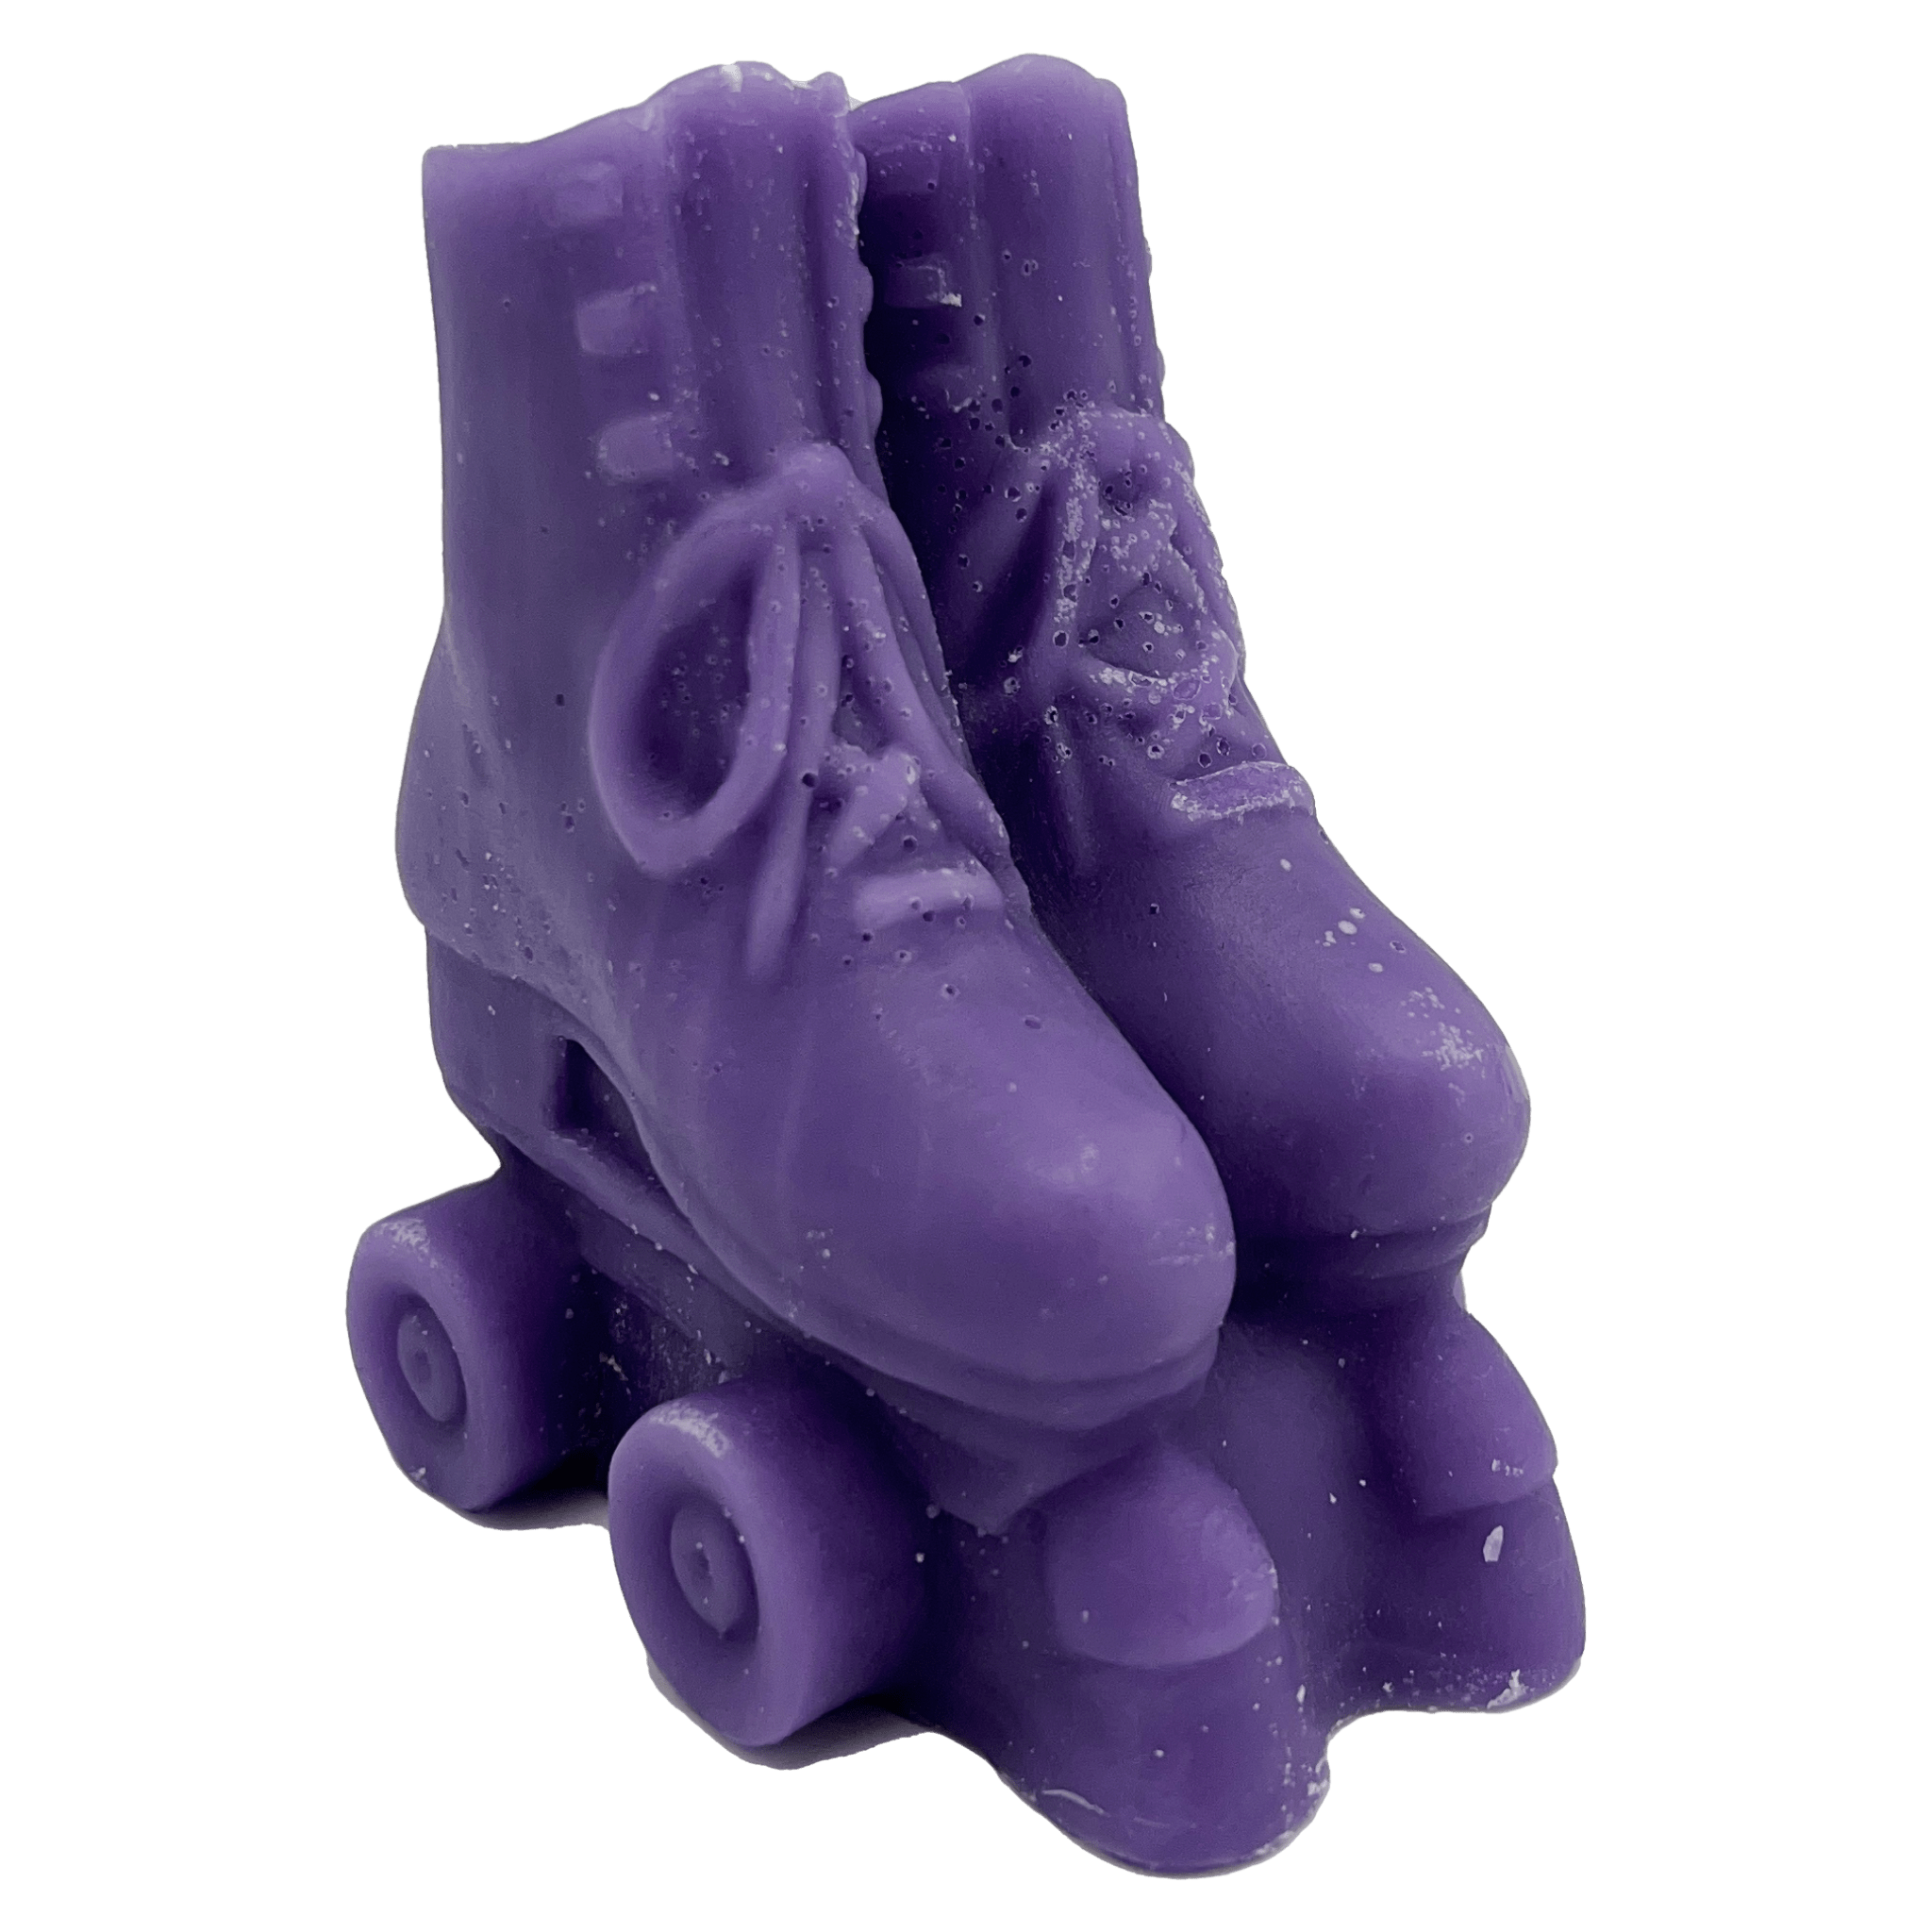 custom scented skate wax with custom